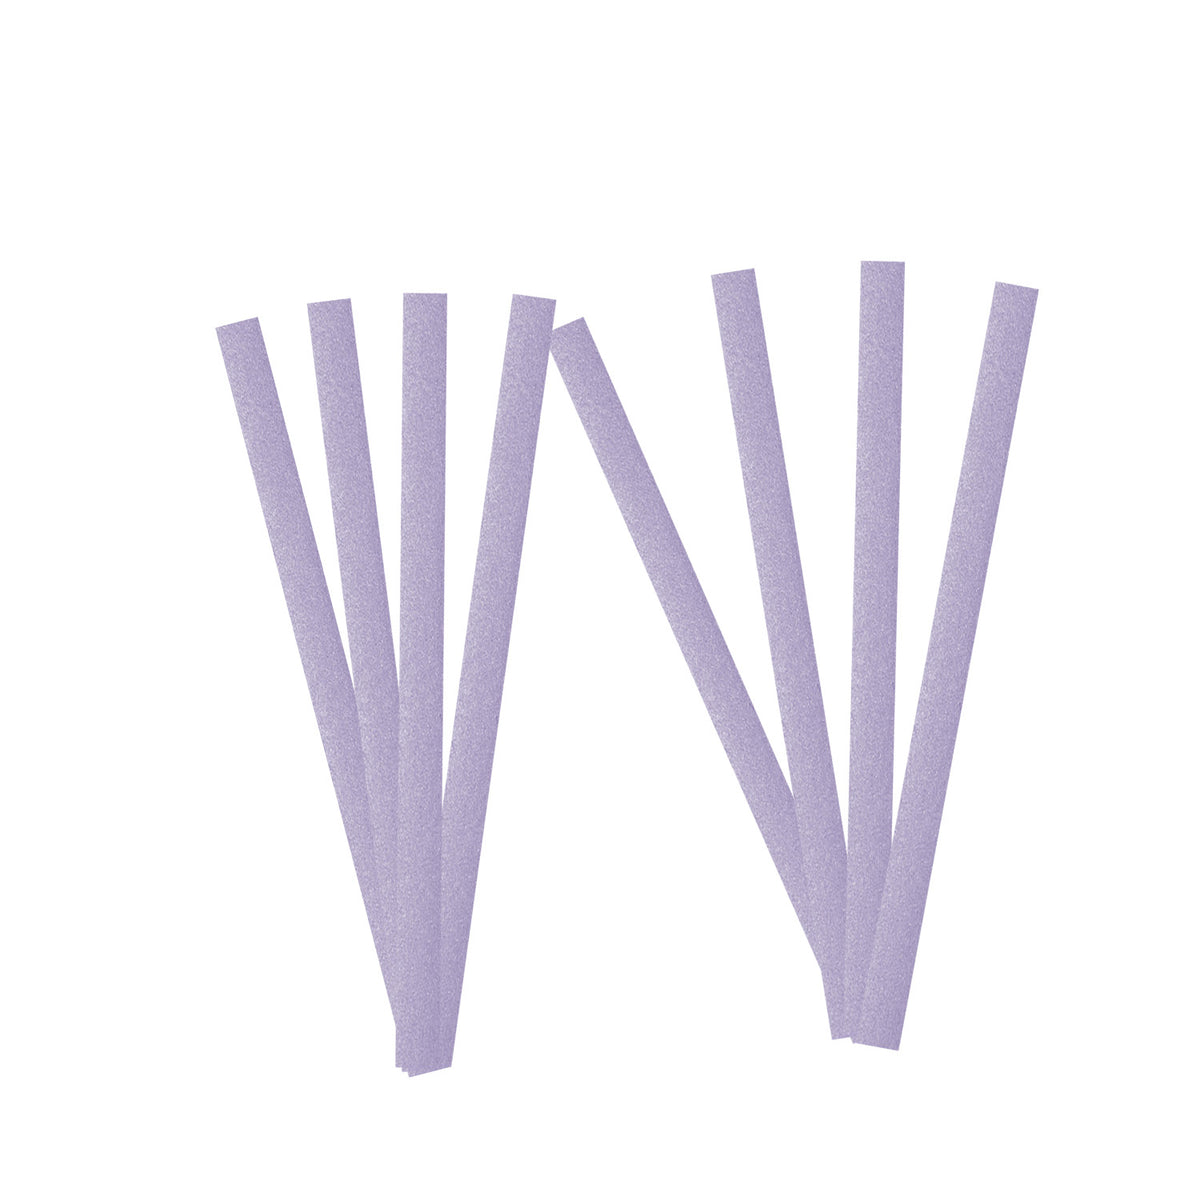 Shimmery Belly Band Invitation Wraps - shimmer lavender